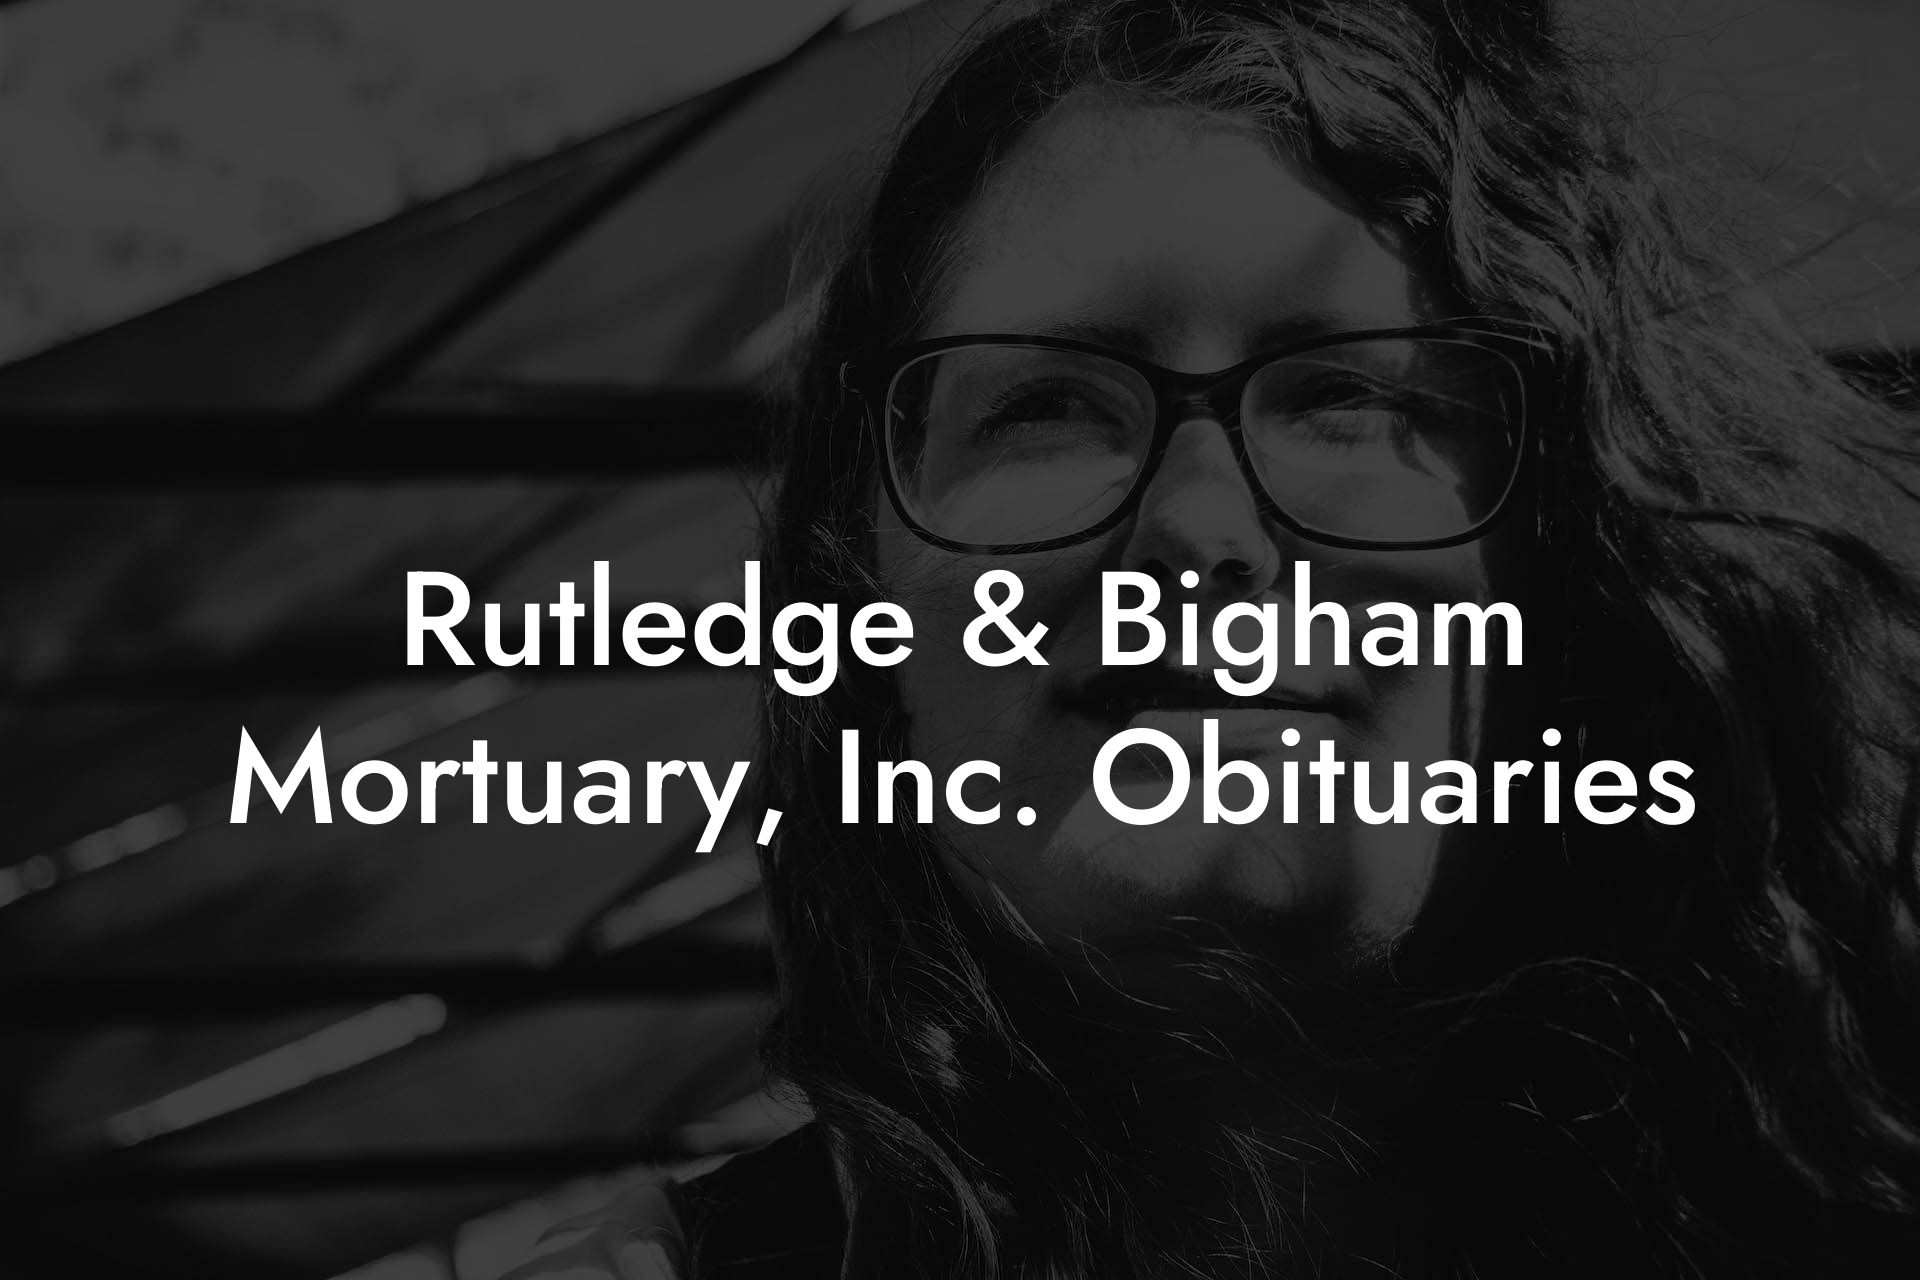 Rutledge & Bigham Mortuary, Inc. Obituaries